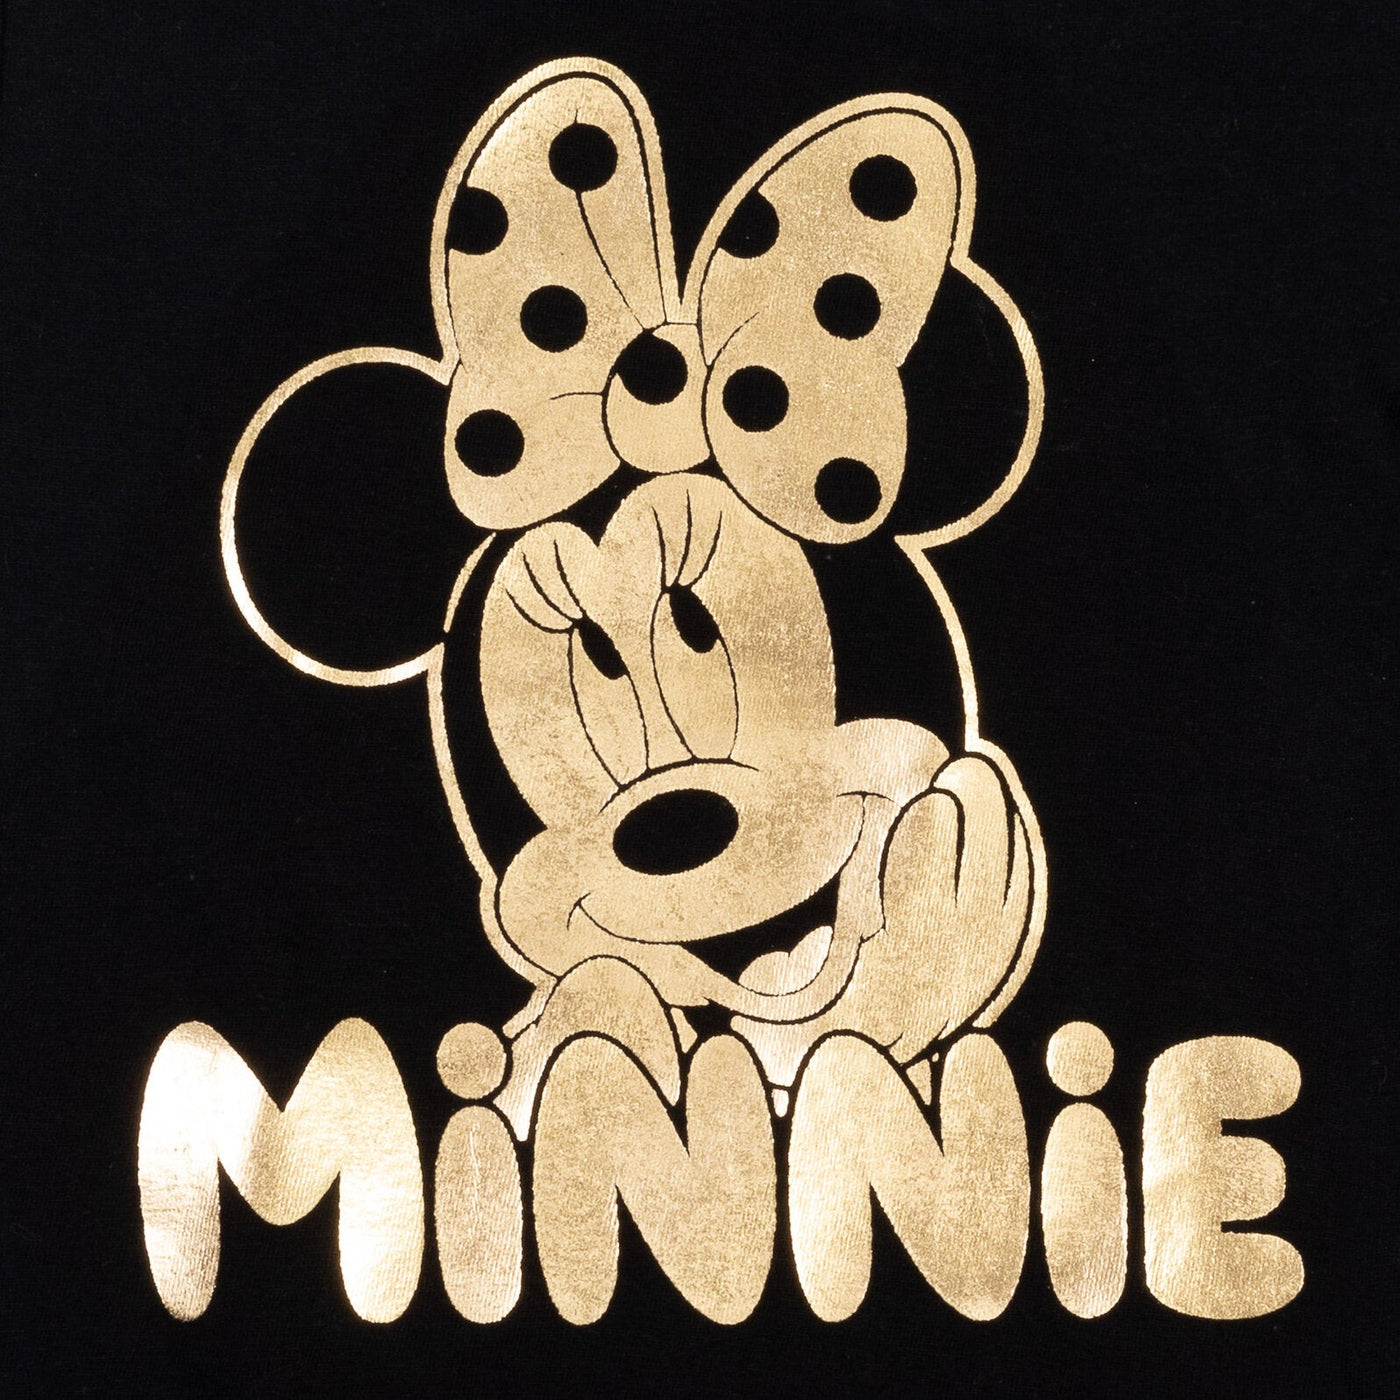 Disney Minnie Mouse Pullover T-Shirt - imagikids